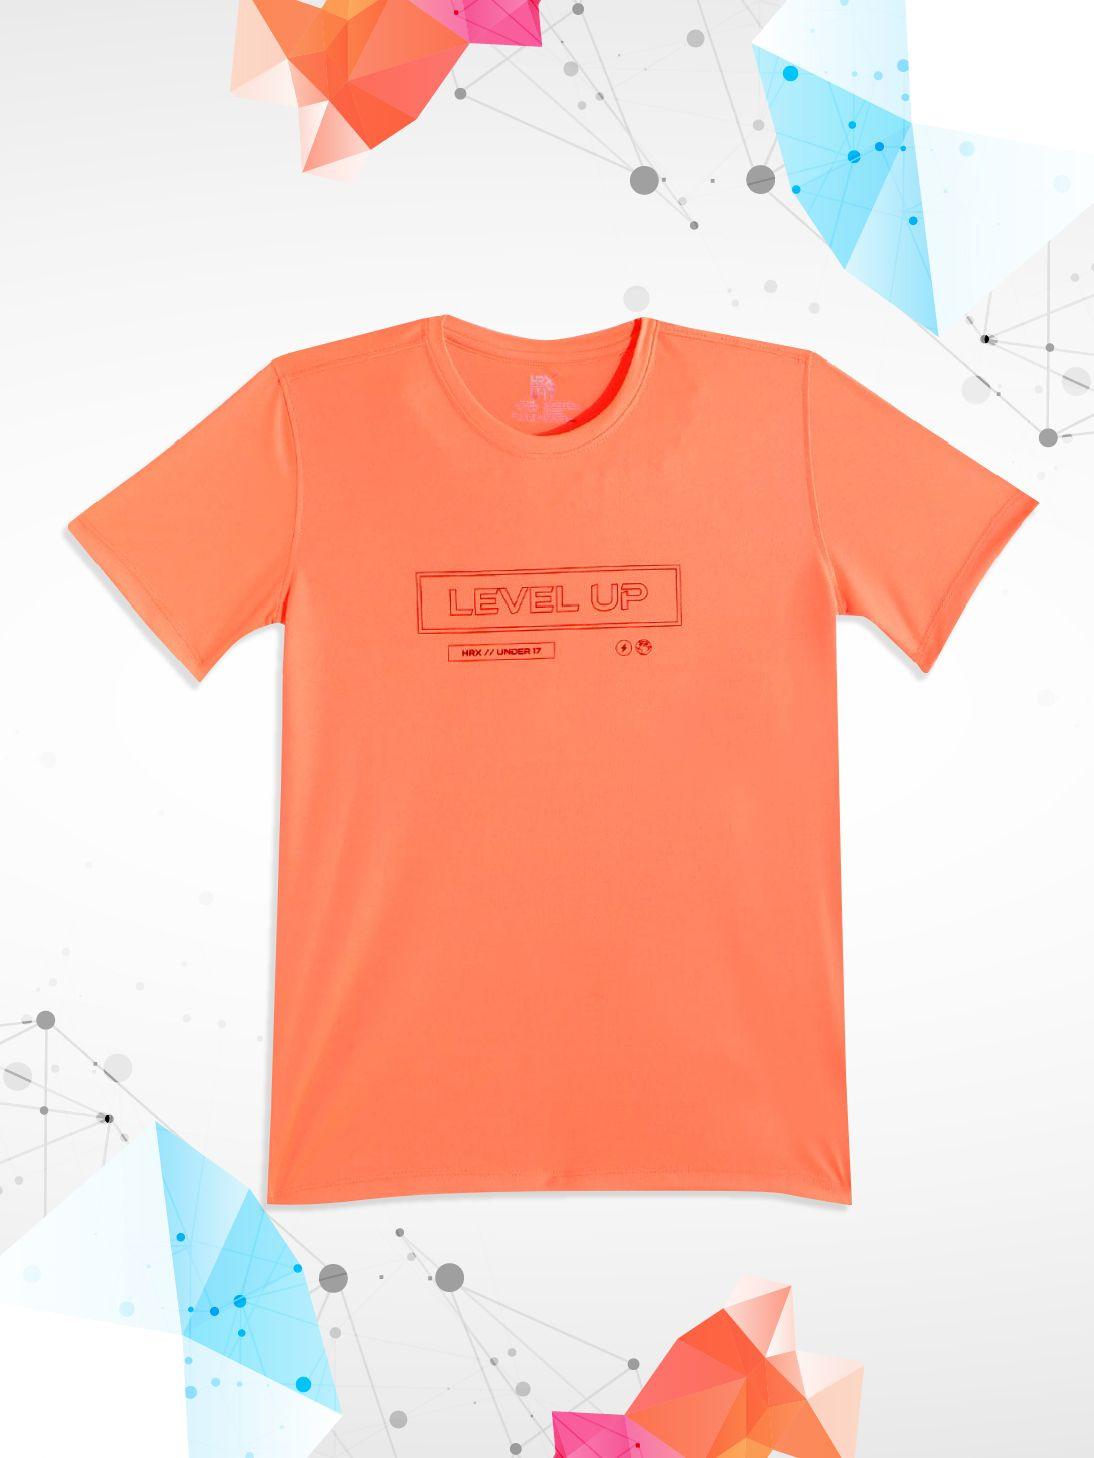 hrx by hrithik roshan active boys neon orange rapid-dry graphic tshirts